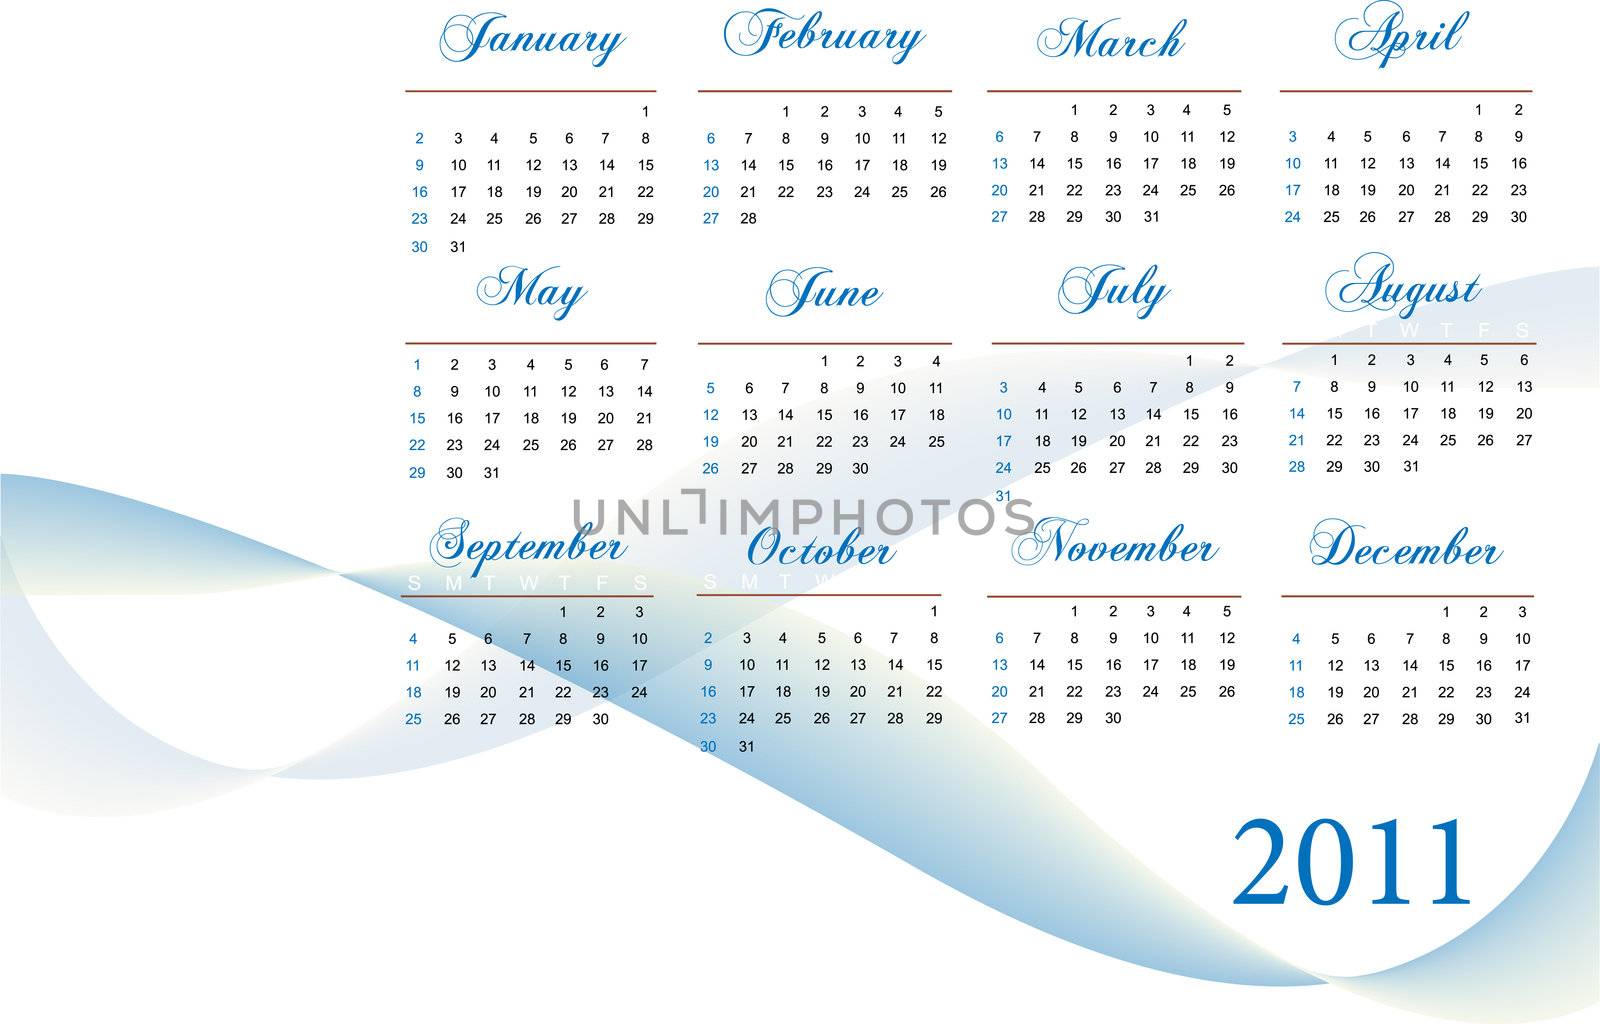 2011 Calendar by nmarques74